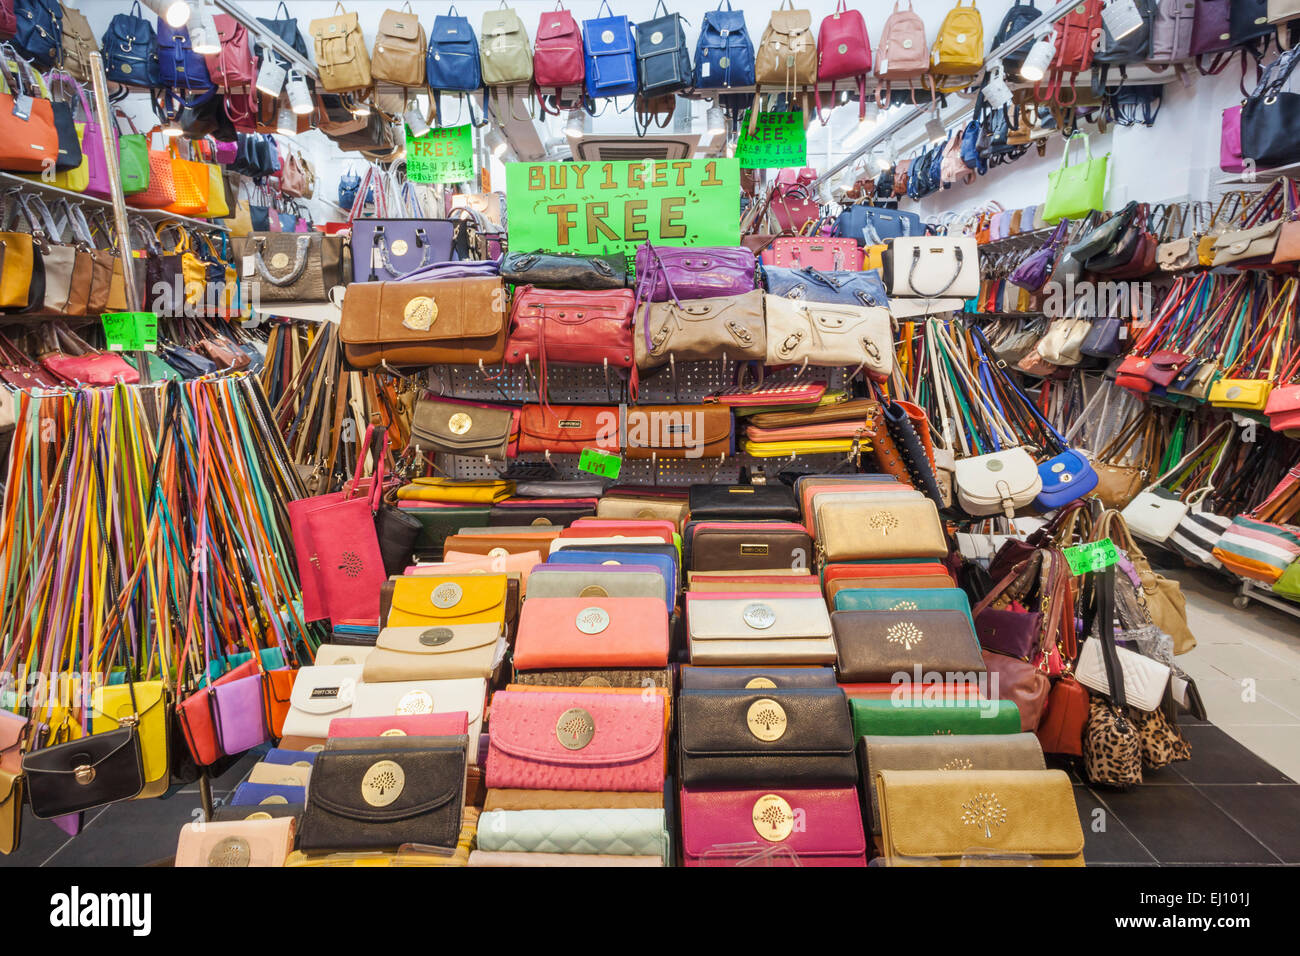 https://c8.alamy.com/comp/EJ101J/china-hong-kong-stanley-market-shop-display-of-fake-purses-and-handbags-EJ101J.jpg